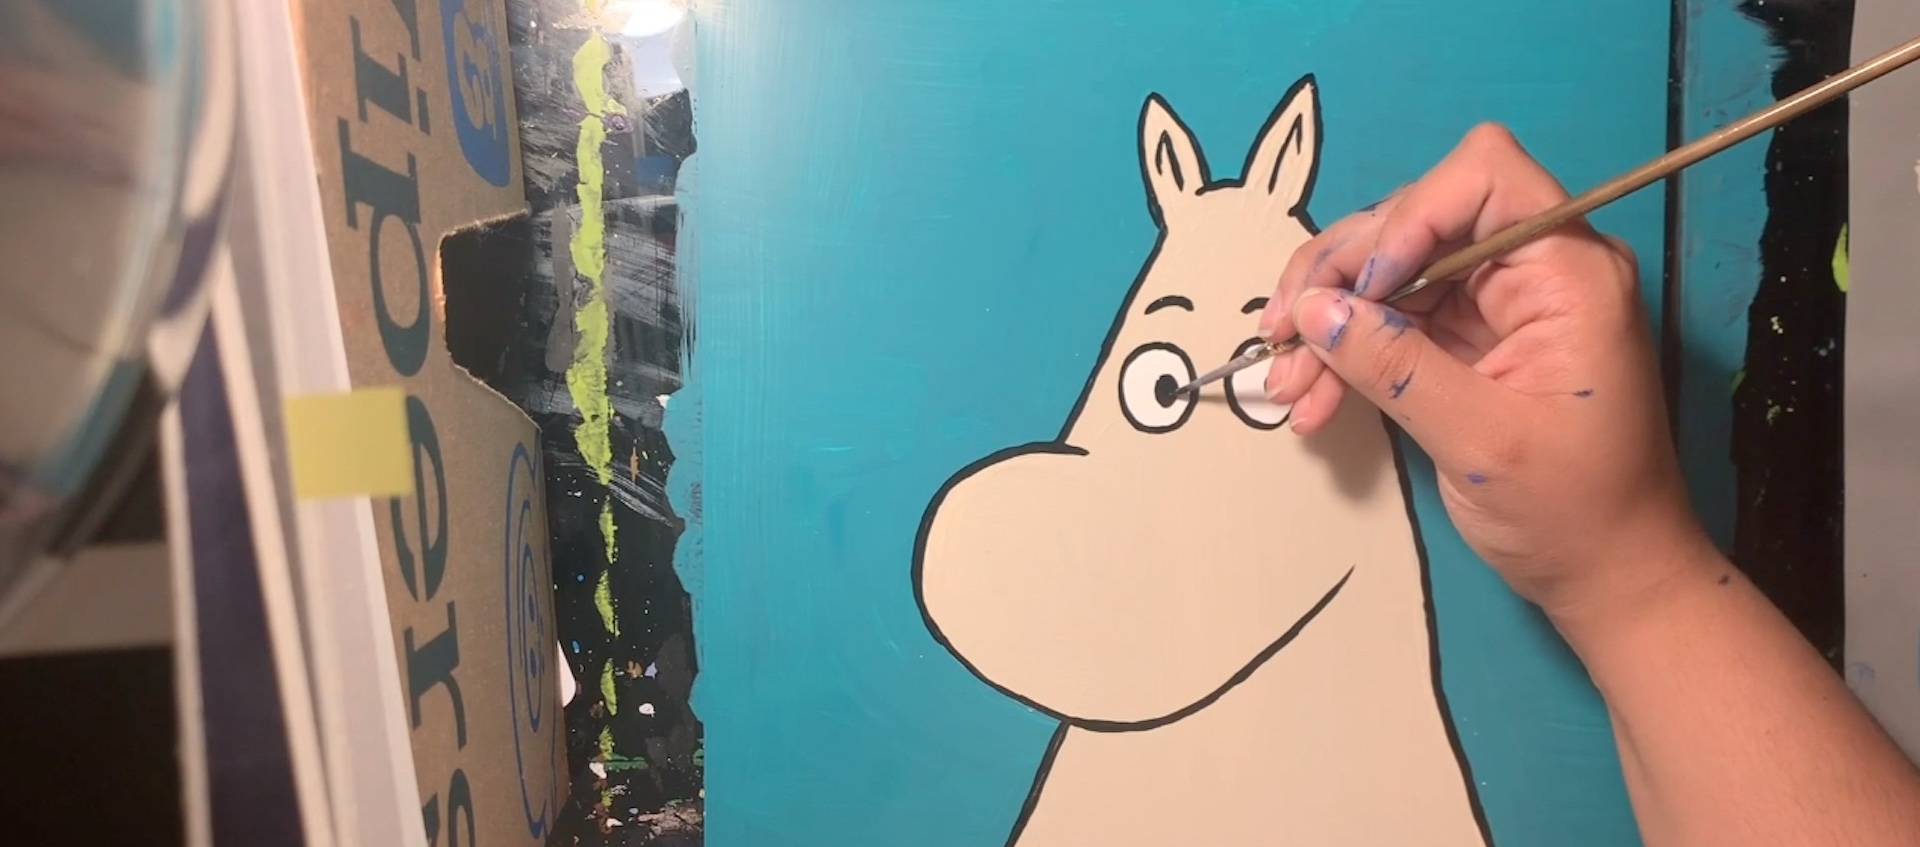 The hand of artist Bethani Blake paints a Moomin figure